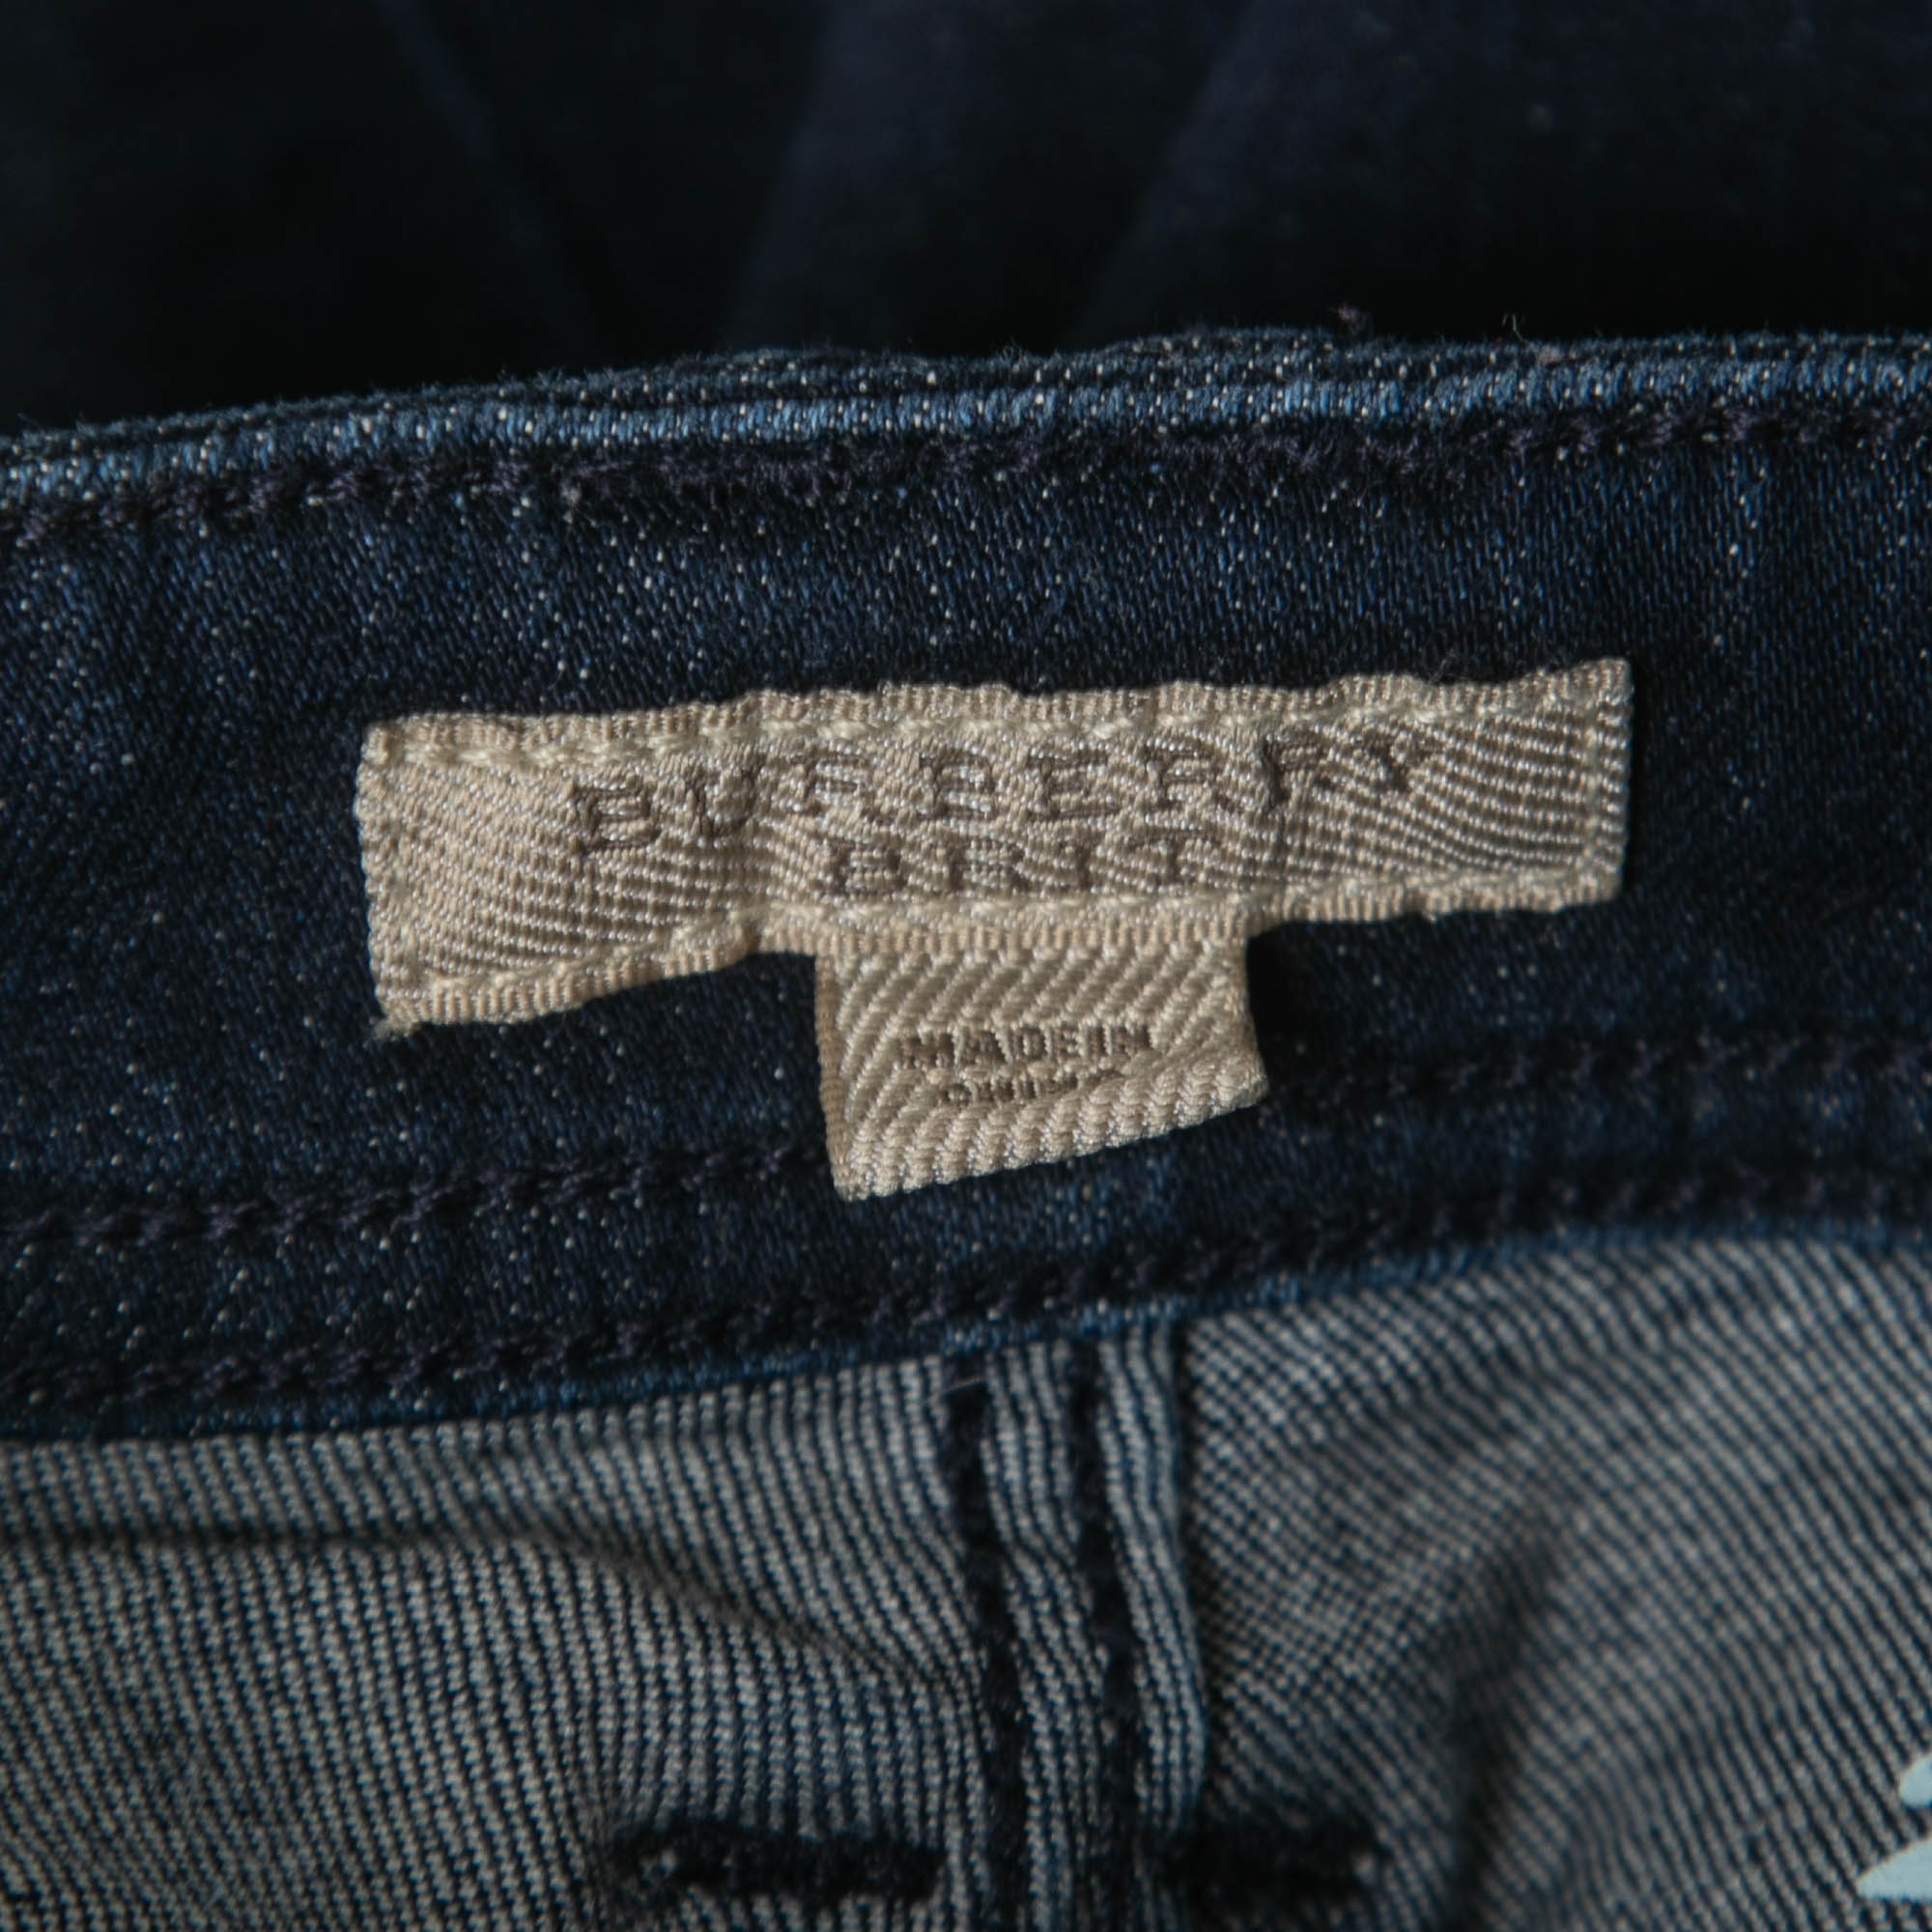 Burberry Brit Navy Blue Denim Corwell Jeans S